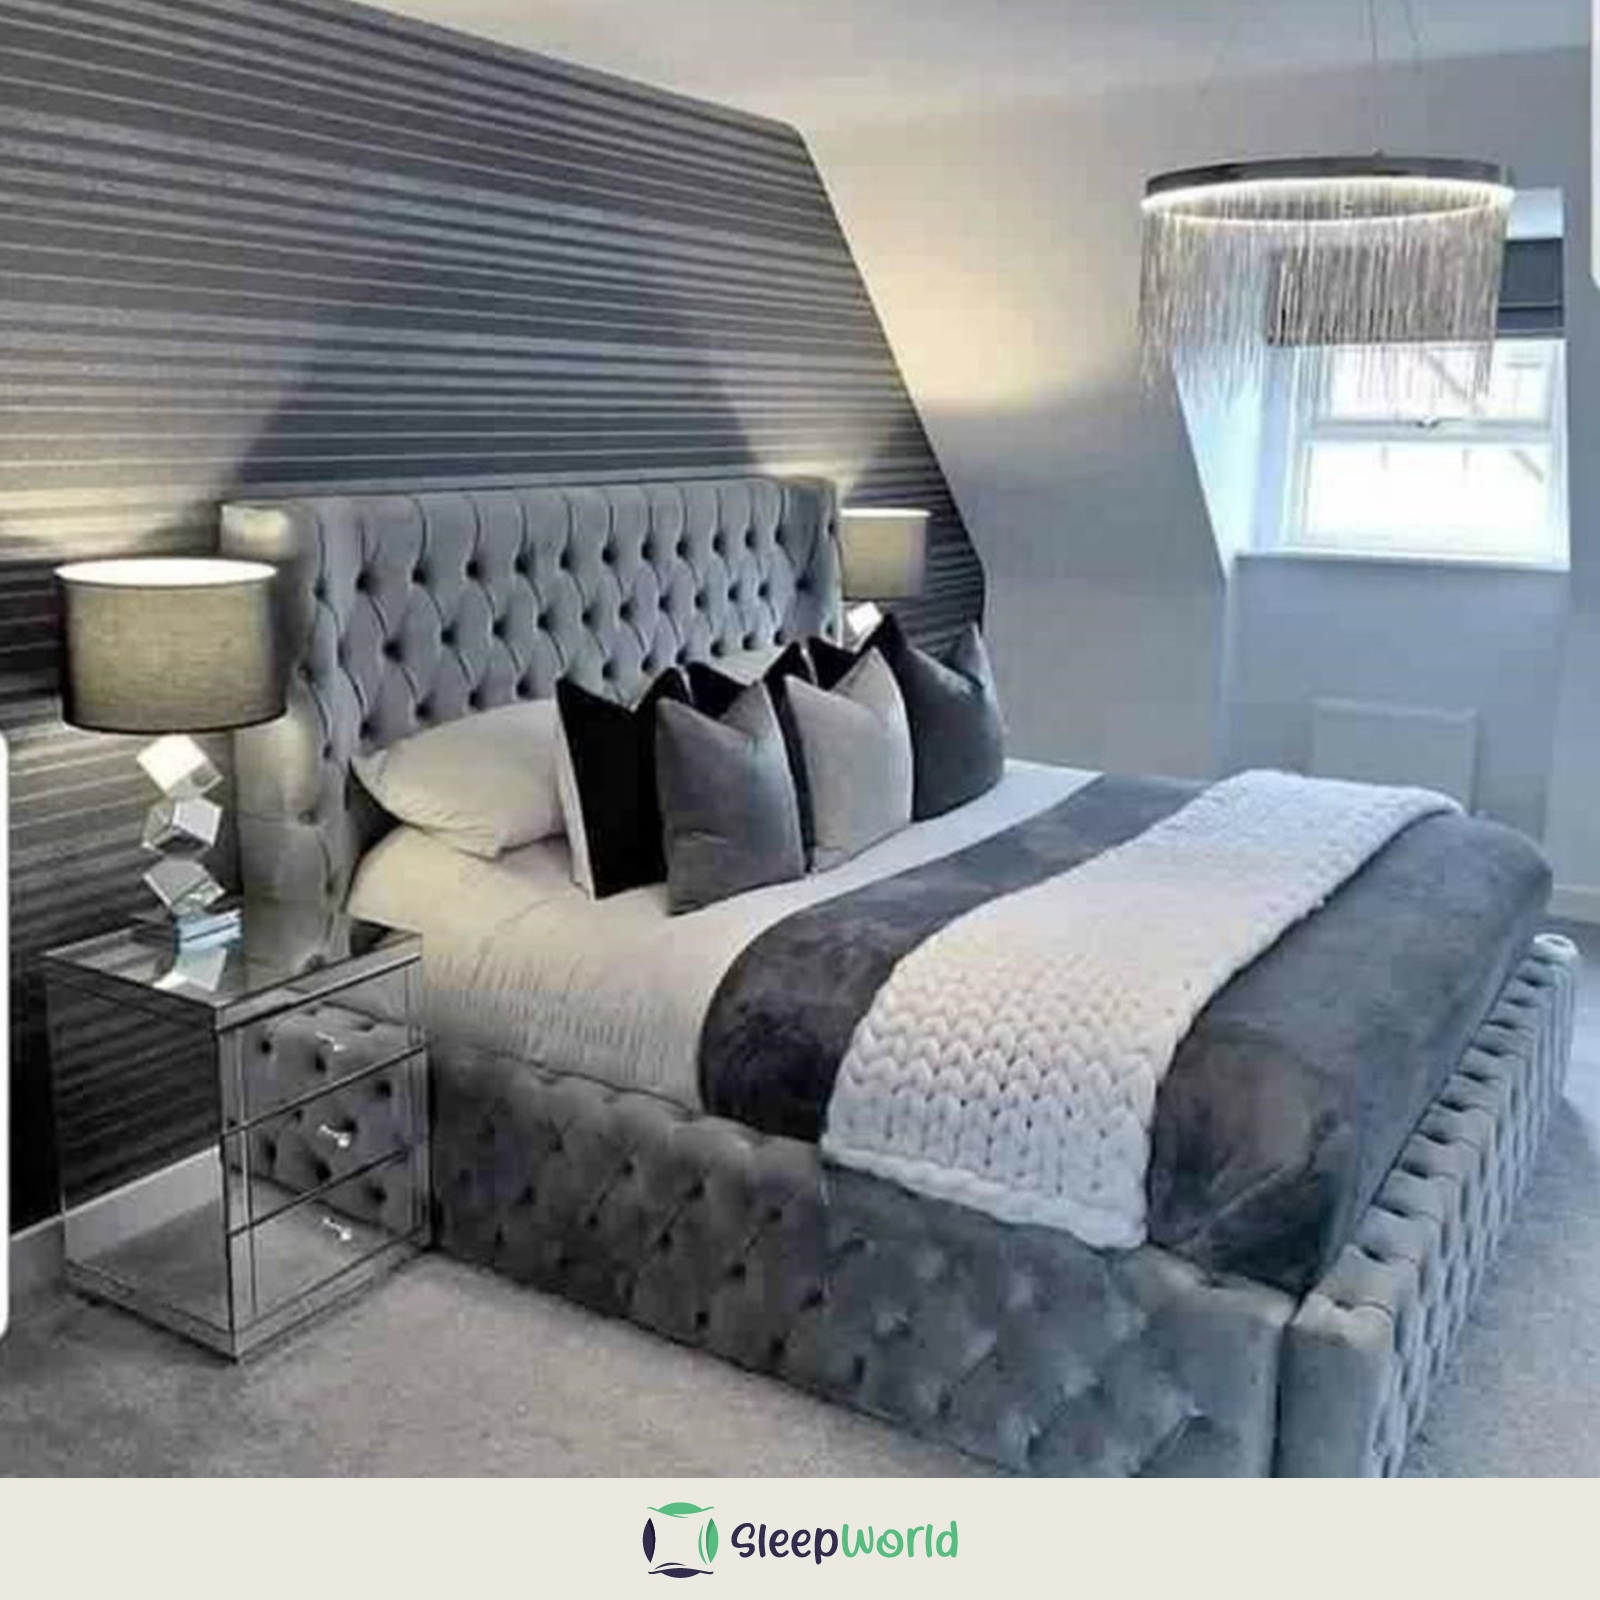 Ambassador Bed – Super King – 6FT – Gas Lift Ottoman Base – Optional Mattress – Upholstered – Sleep World Furniture